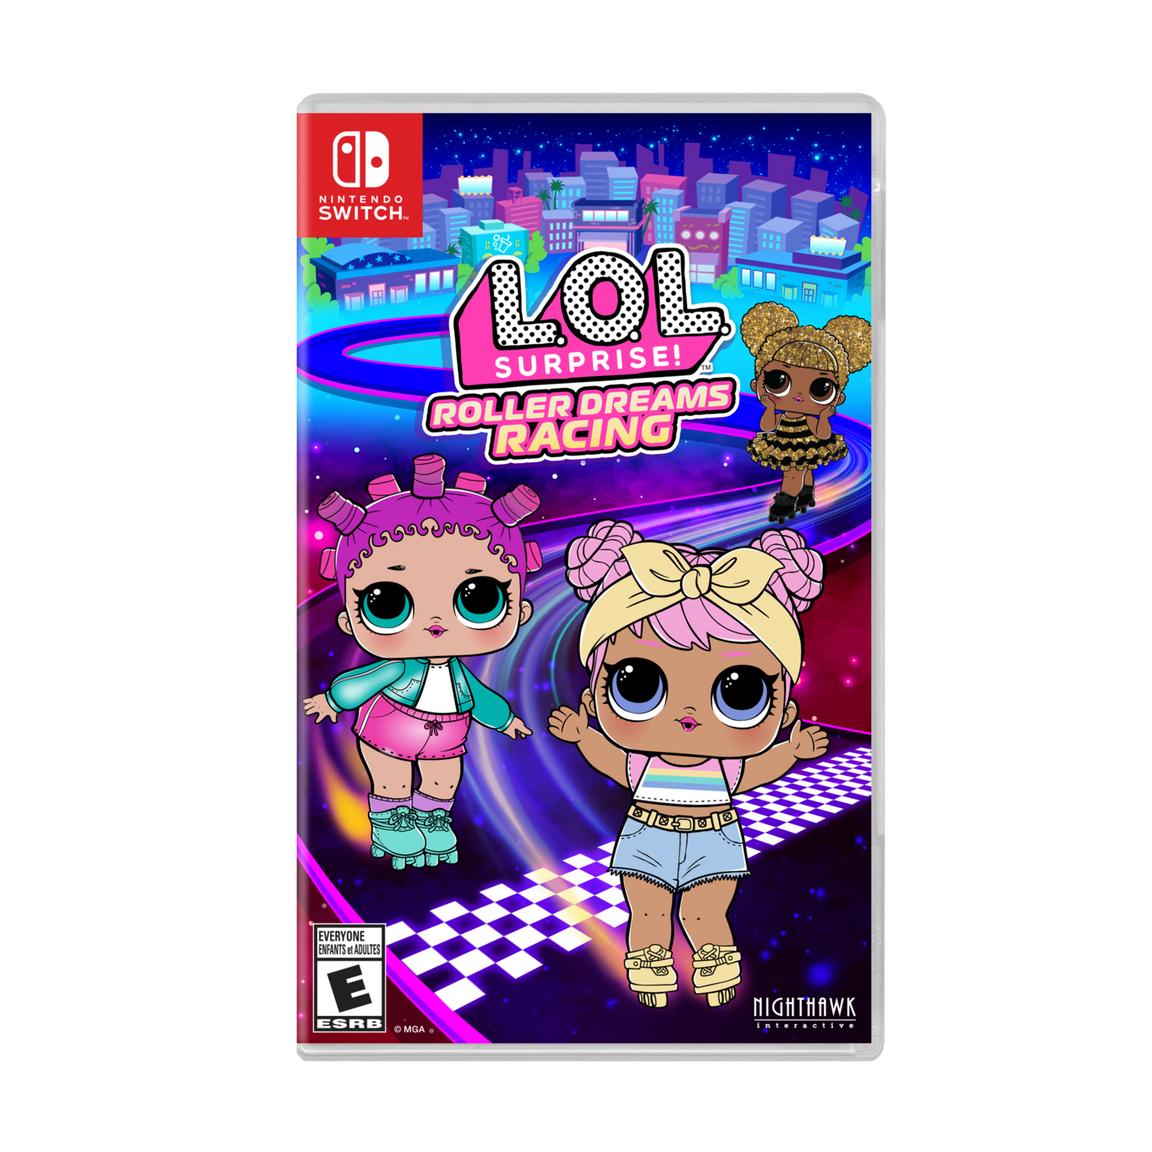 Видеоигра L.O.L. Surprise! Roller Dreams Racing - Nintendo Switch giana sisters twisted dreams owltimate edition nintendo switch